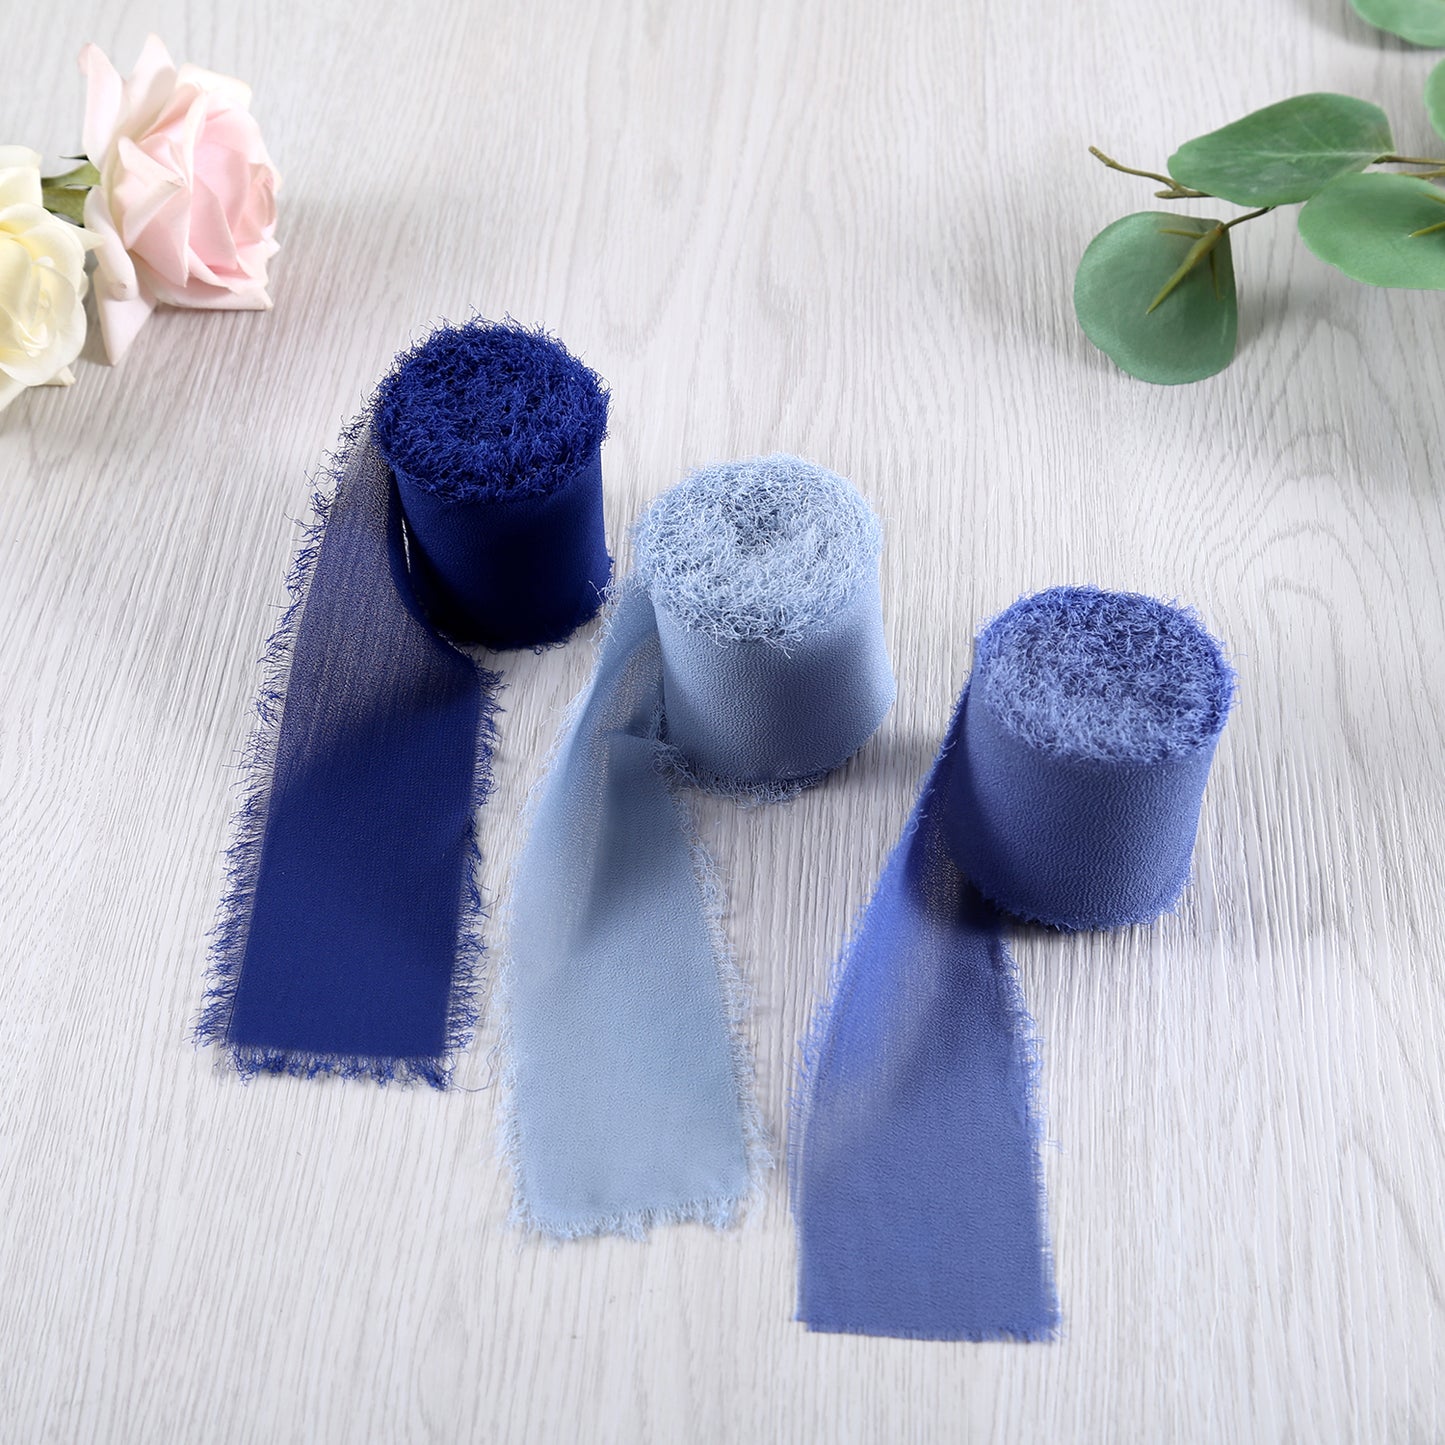 Handmade Fringe Chiffon Silk-Like Ribbon 2" x 7Yd Set of 3 Rolls Ribbons for Wedding Invitations, Bouquets, Gift Wrapping (3 Rolls Navy Blue/Crayola Blue/Dusty Blue)